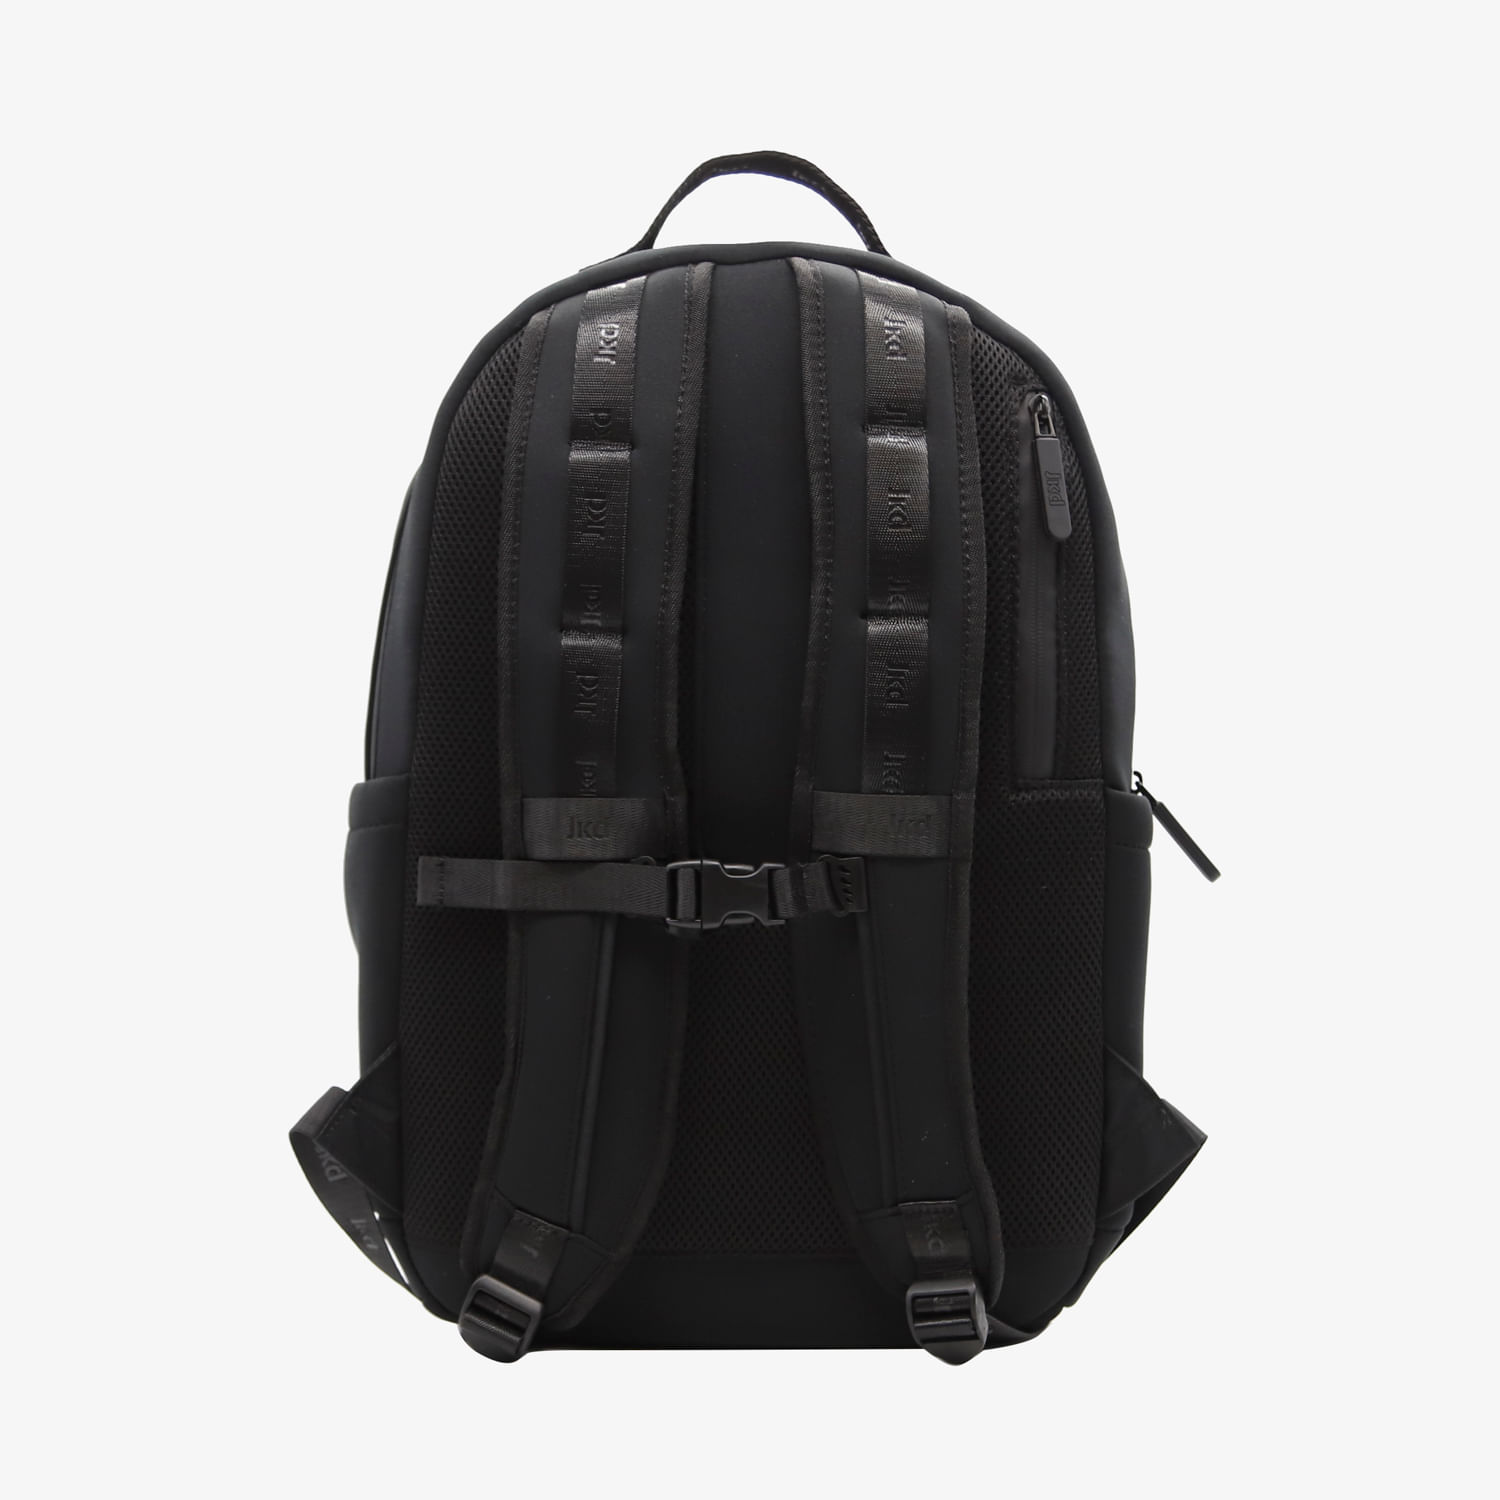 CHRONO backpack